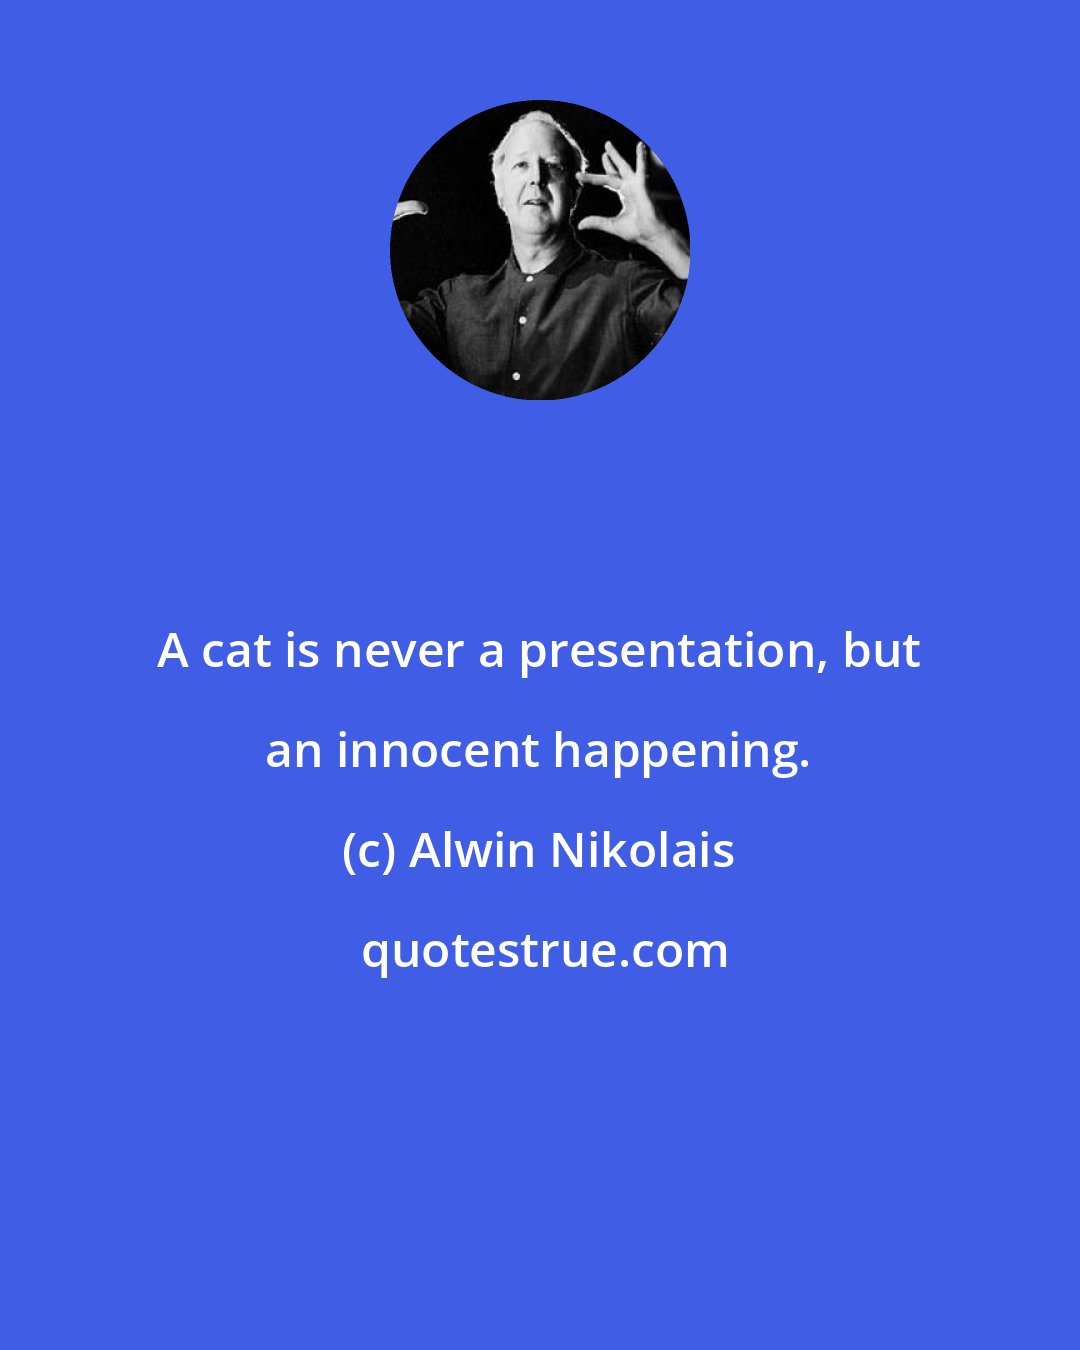 Alwin Nikolais: A cat is never a presentation, but an innocent happening.